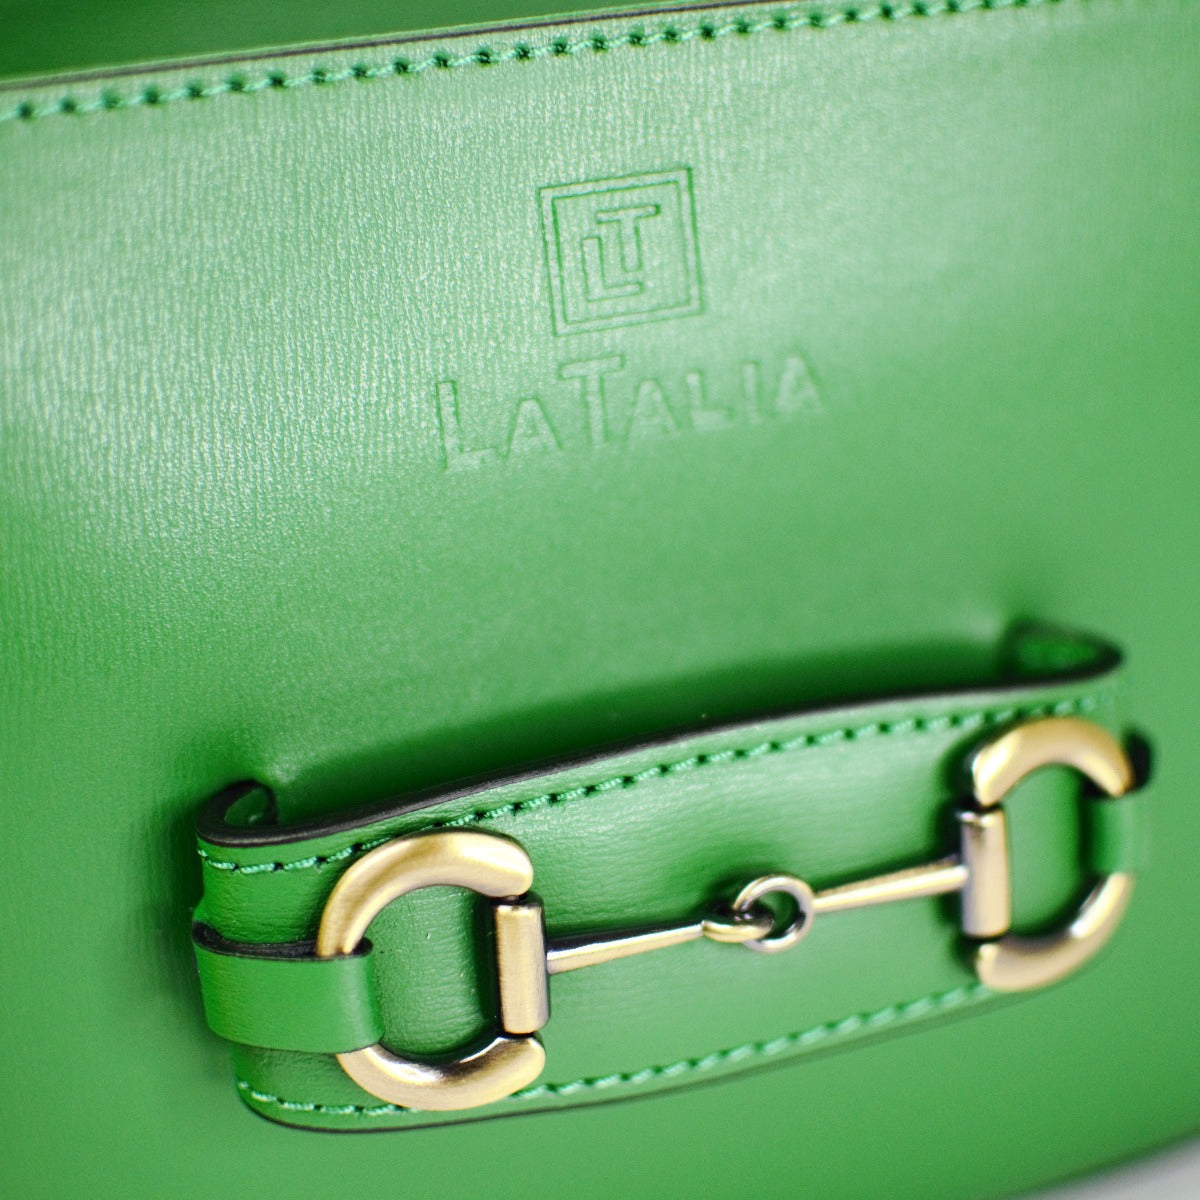 Shoulder strap bag in genuine leather with horsebit "Verona", Green